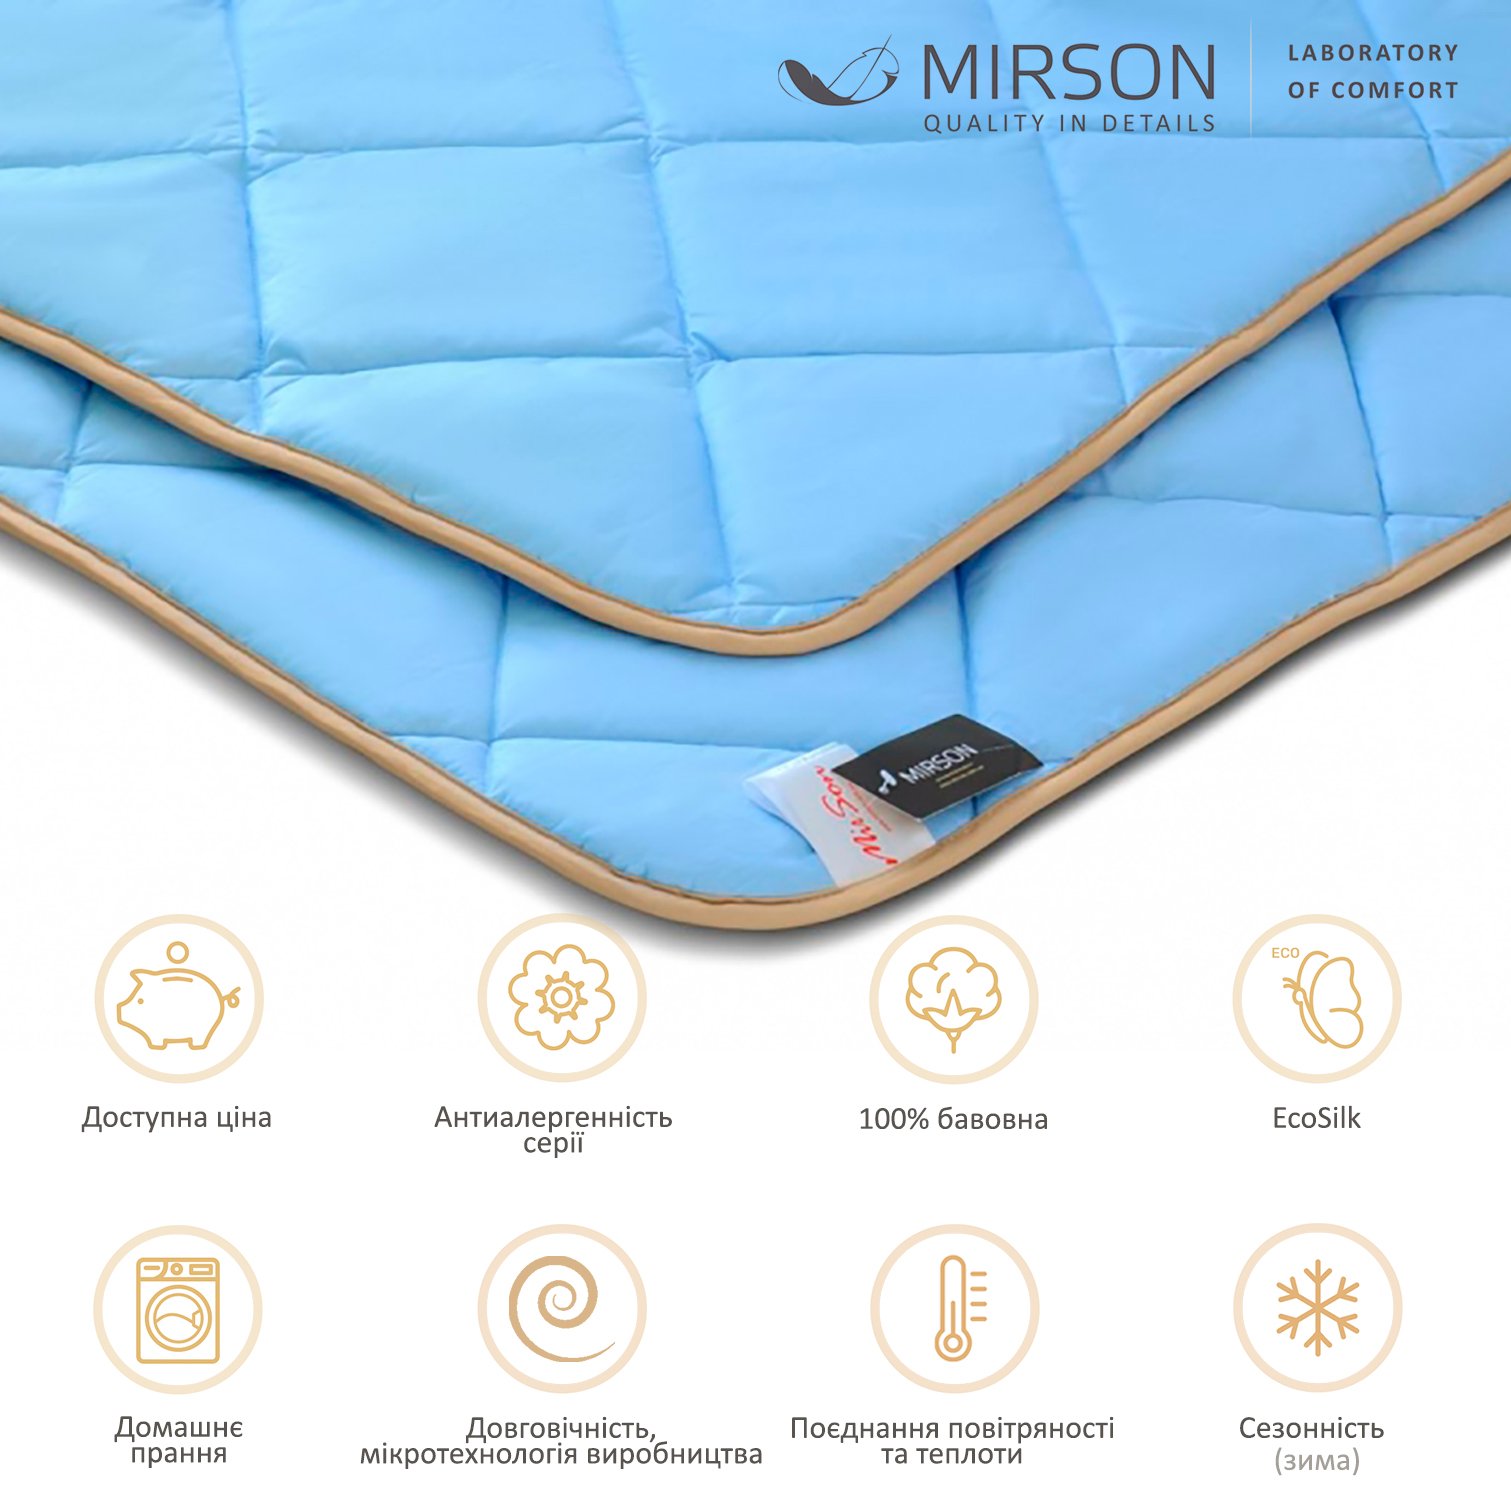 Одеяло антиаллергенное MirSon Valentino Premium EcoSilk №013, зимнее, 140х205 см, голубое - фото 5